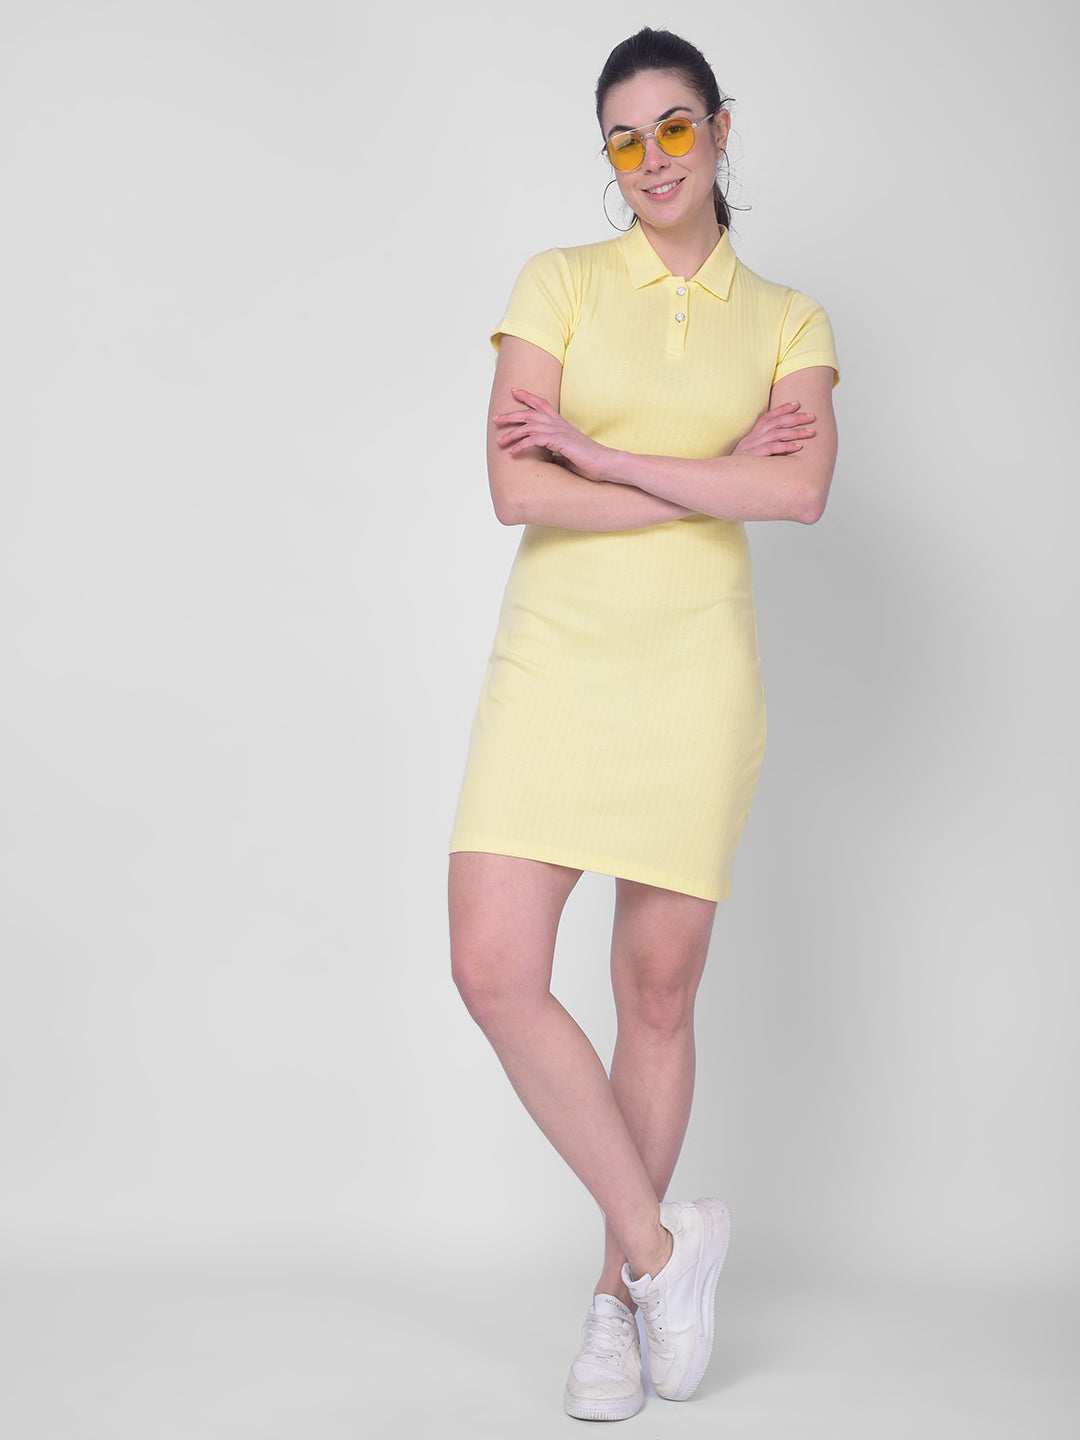 Yellow Bodycon Dress-Women Dresses-Crimsoune Club